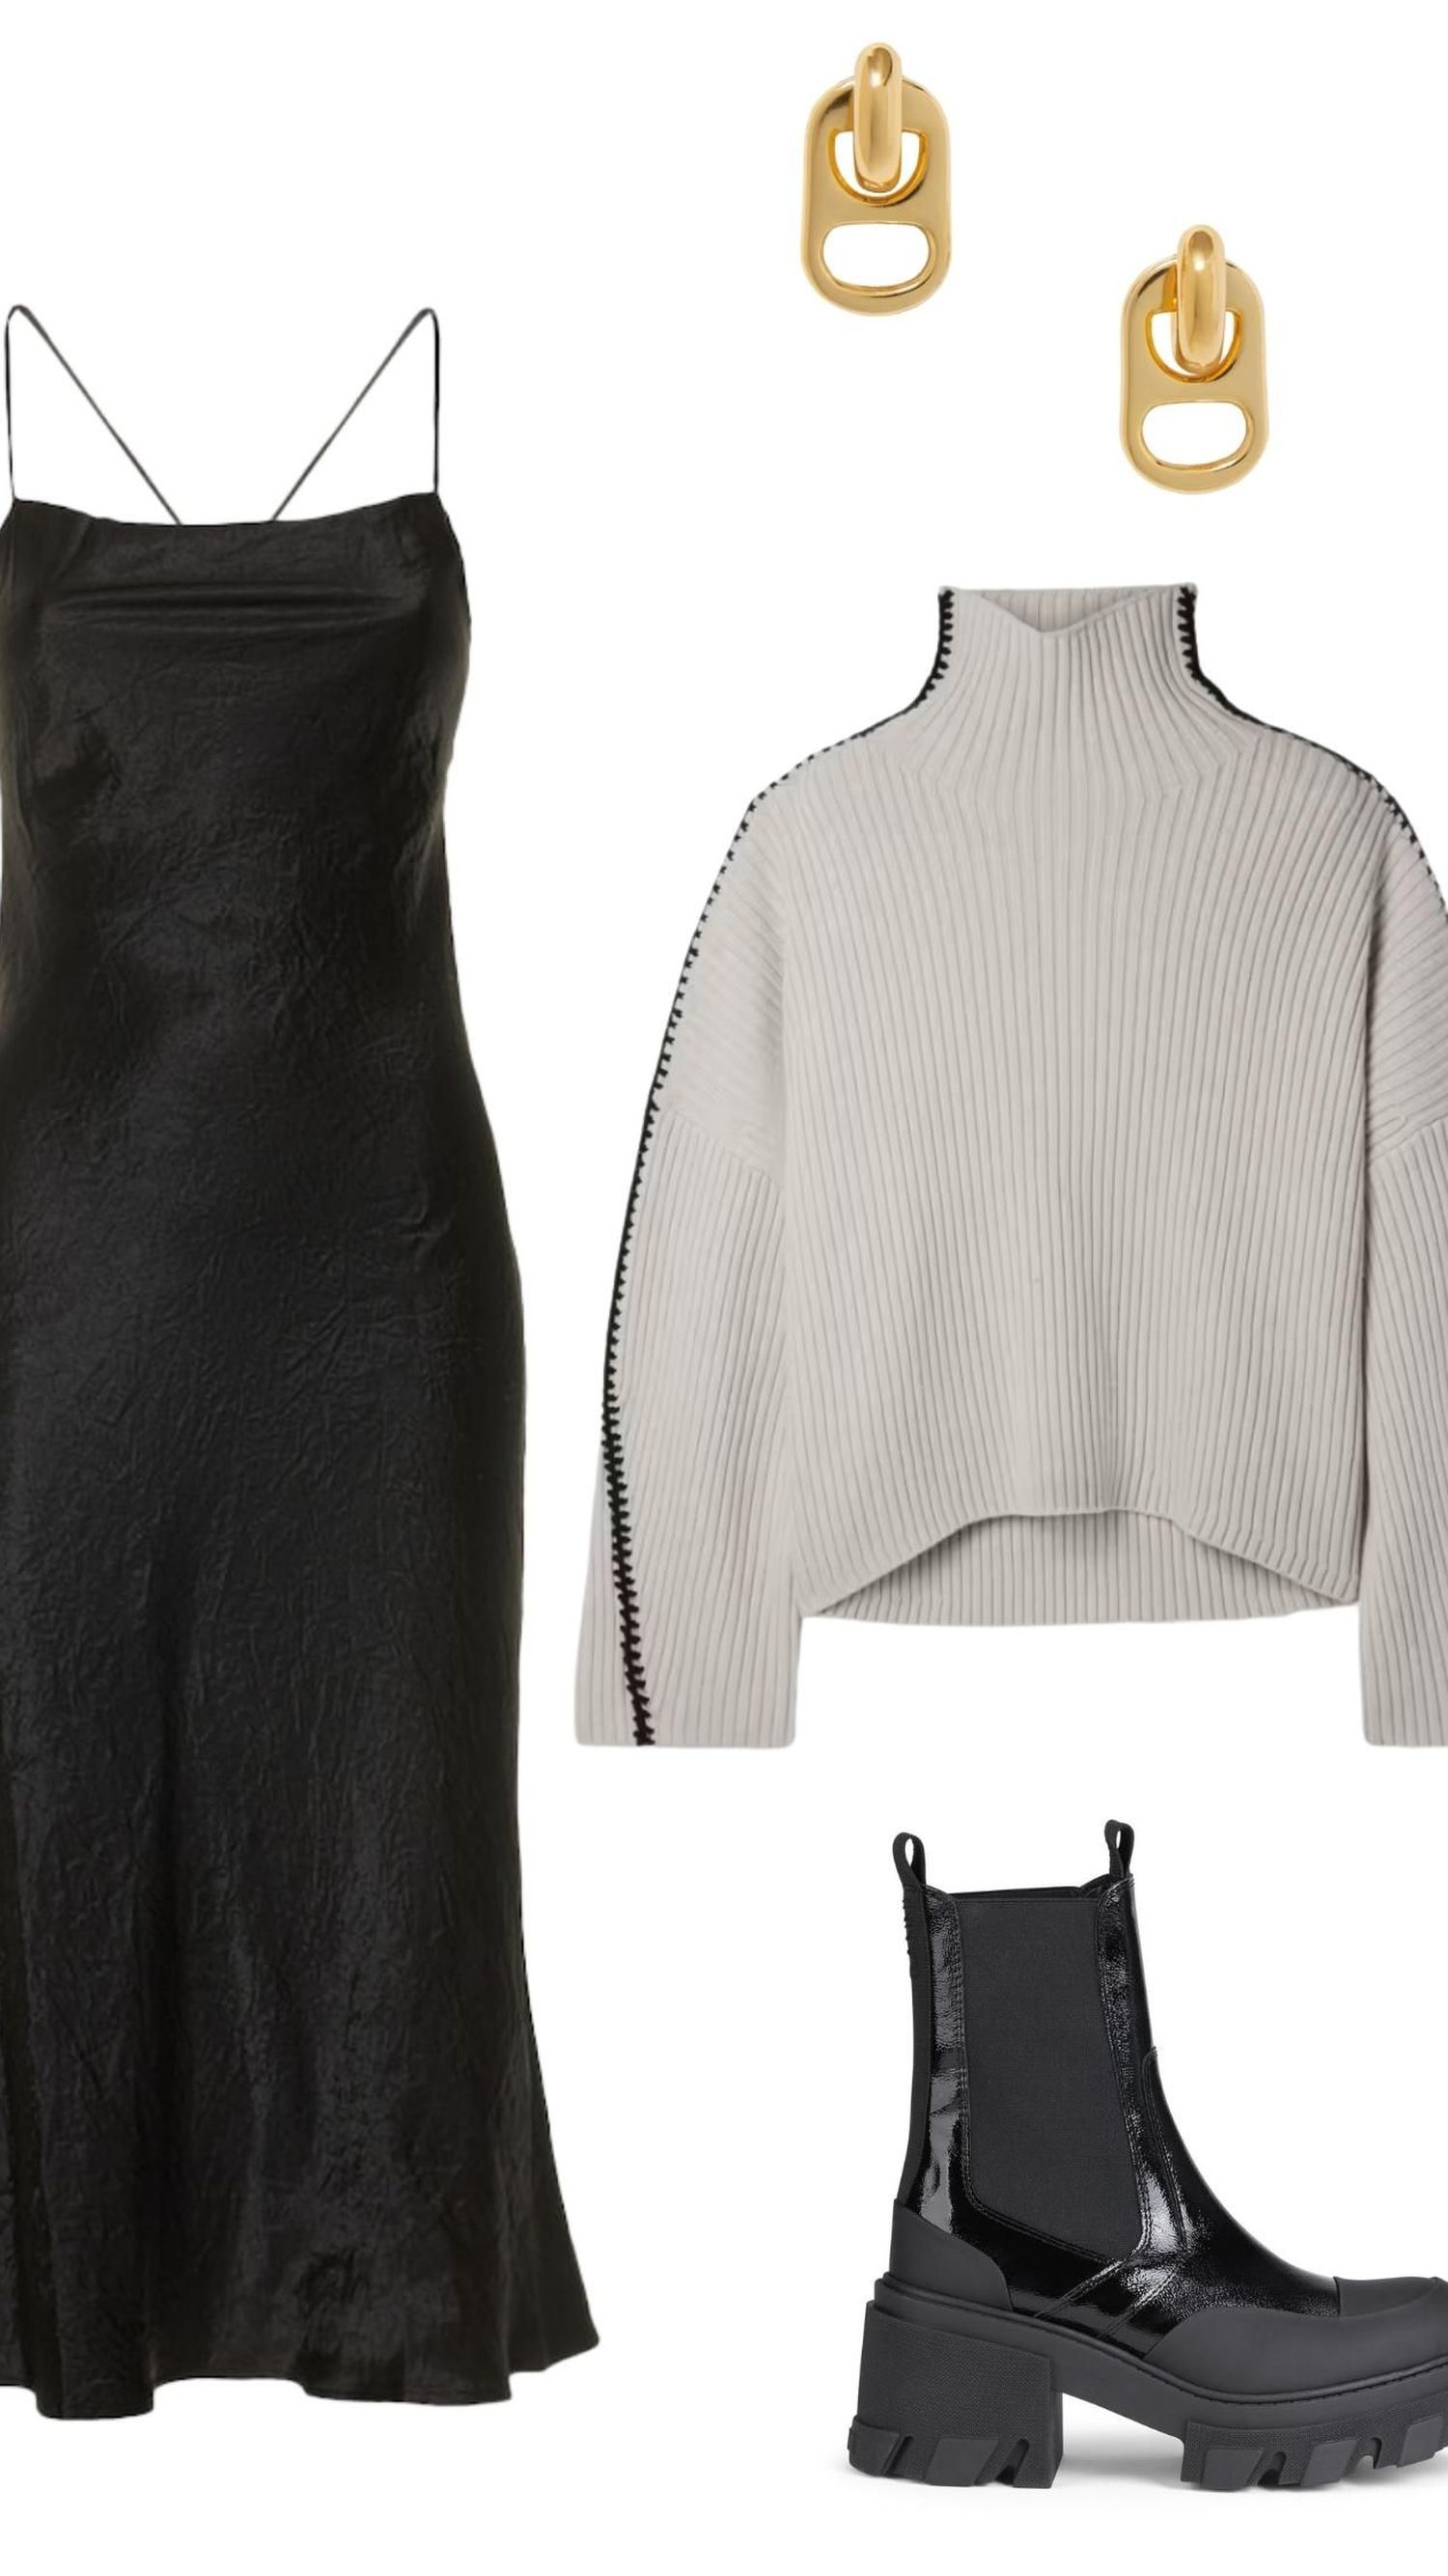 9 ways to style a midi slip dress - Chelsea Q. White blog